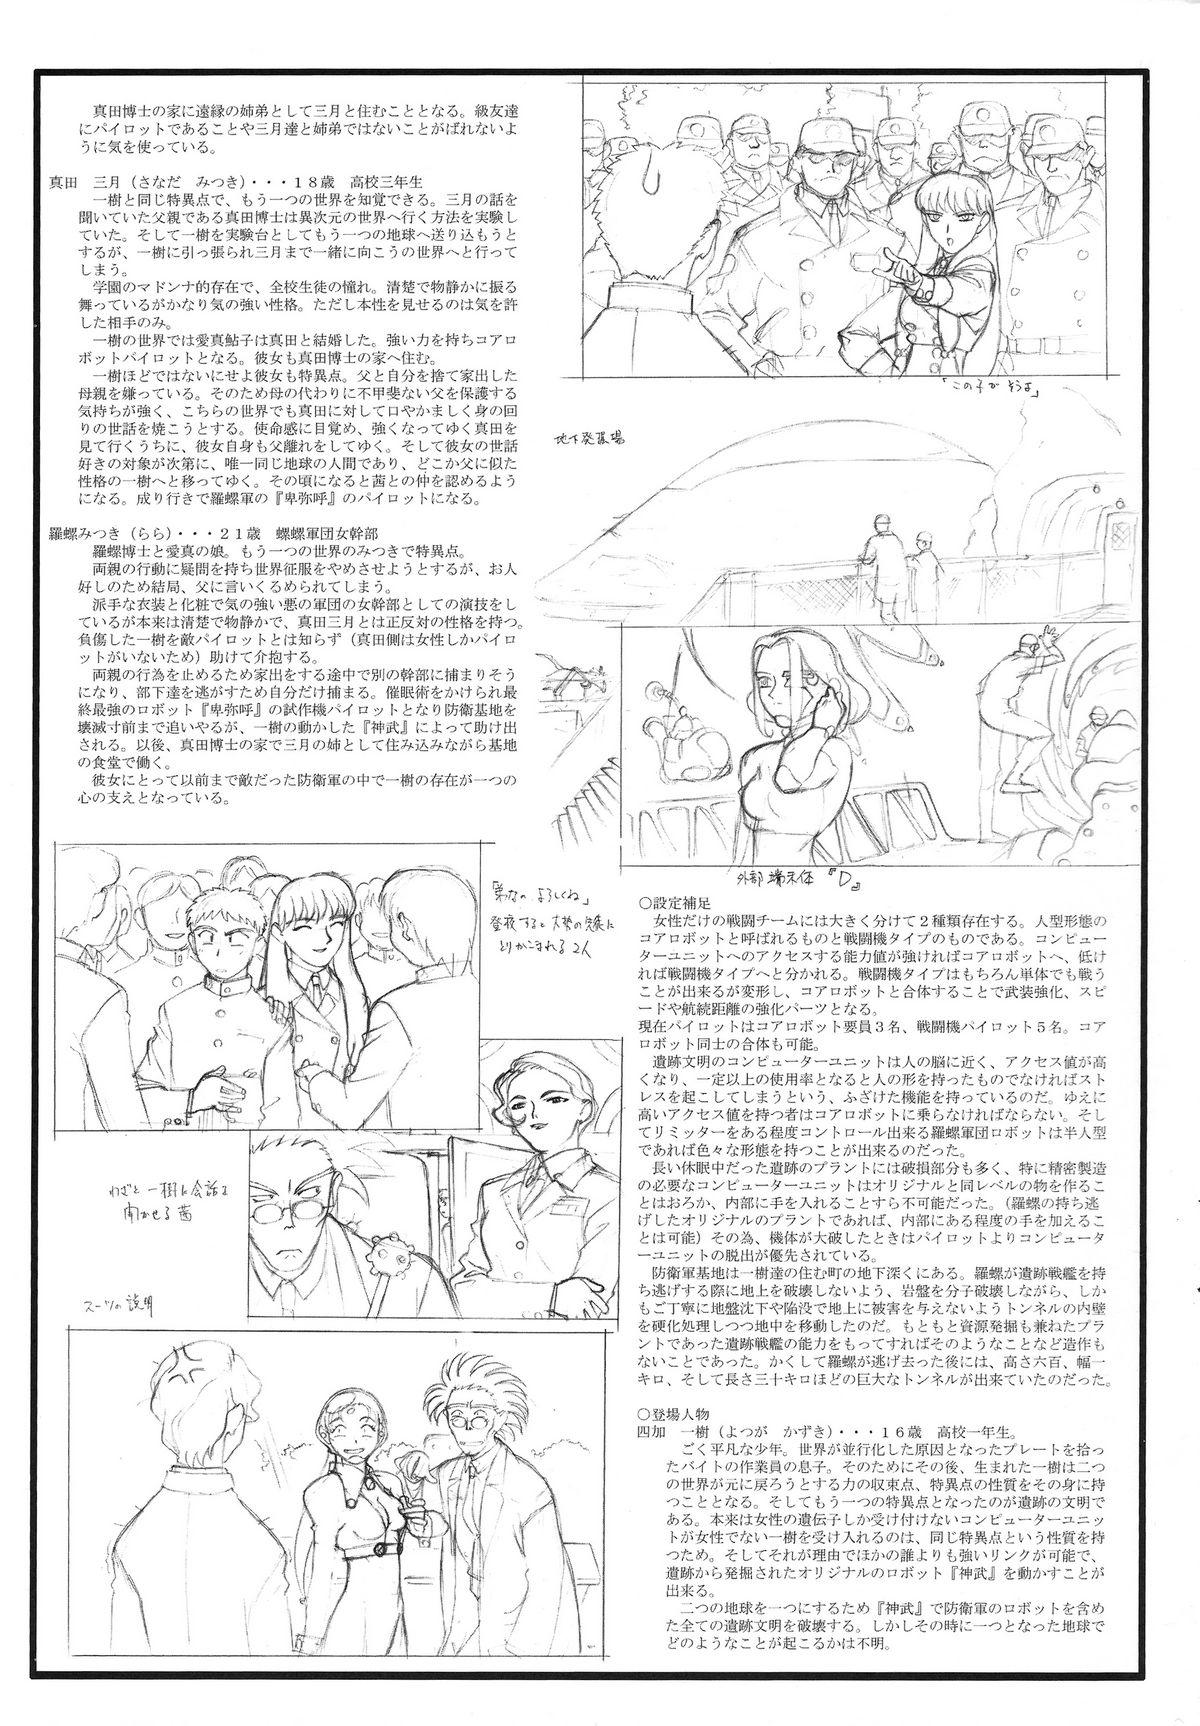 De Quatro Omatsuri Zenjitsu no Yoru Heisei Ban 3 - Dual parallel trouble adventure Spaceship agga ruter Blackcocks - Page 5